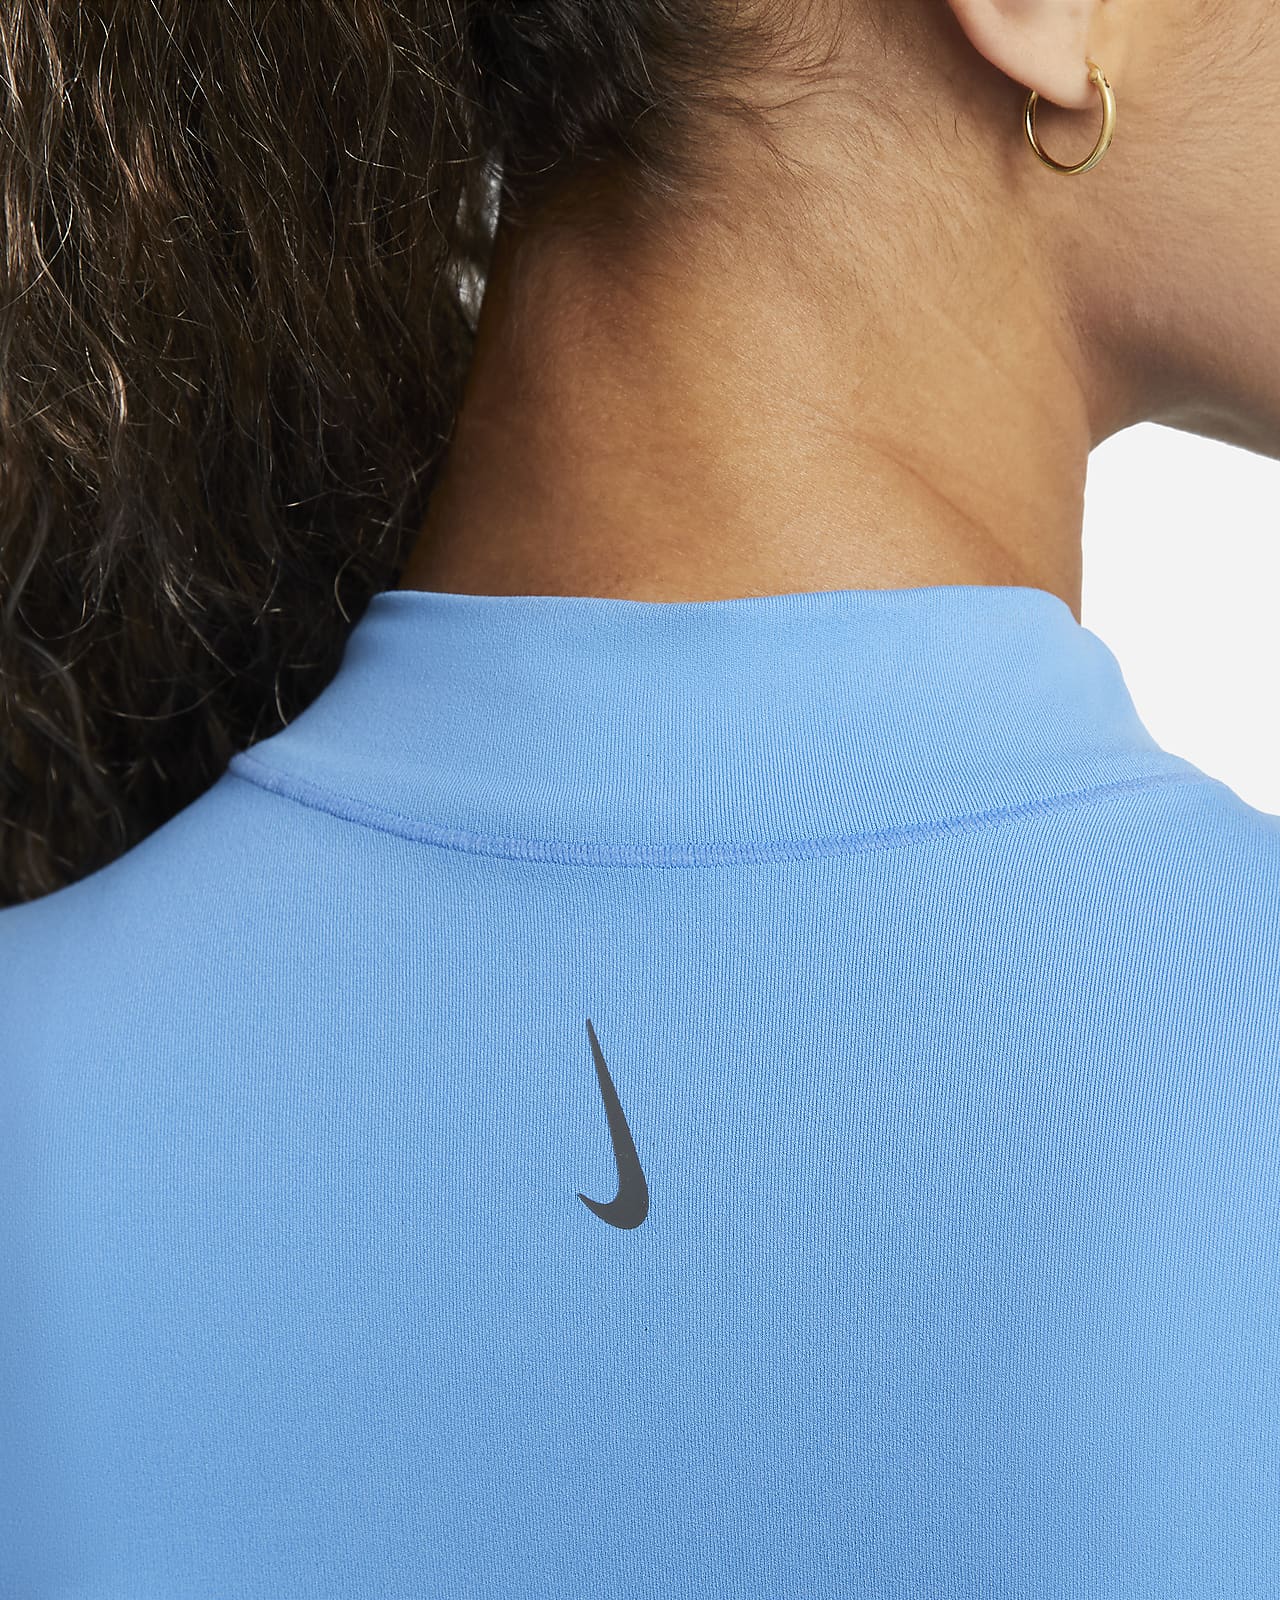 Nike Yoga Luxe Dri-Fit Full Zip Jacket